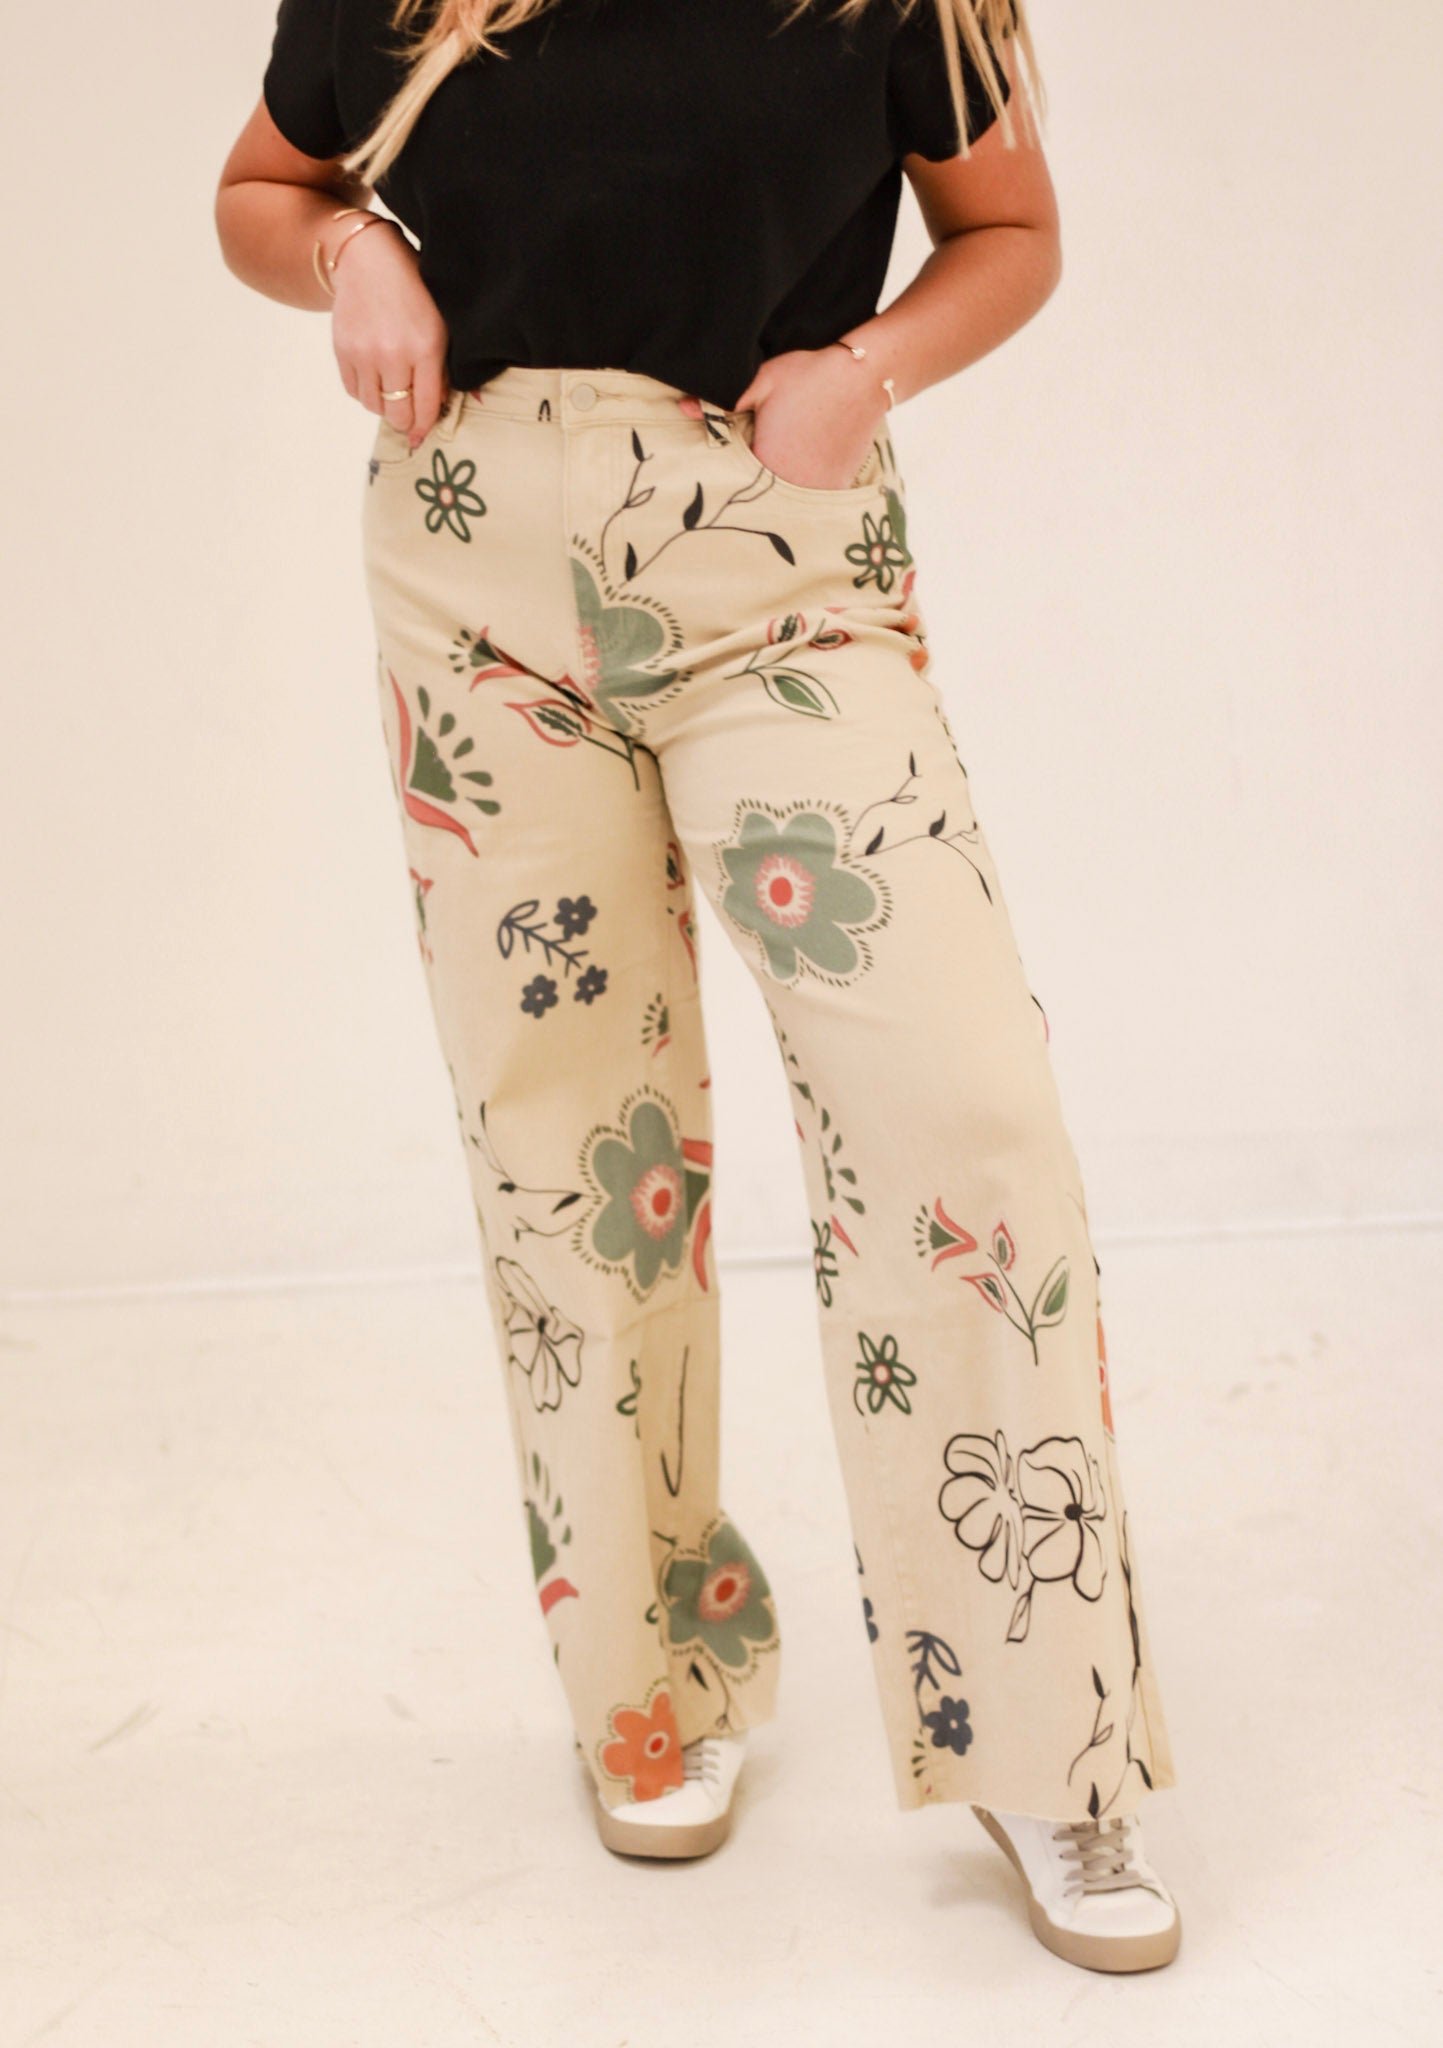 Share 230+ floral denim pants latest